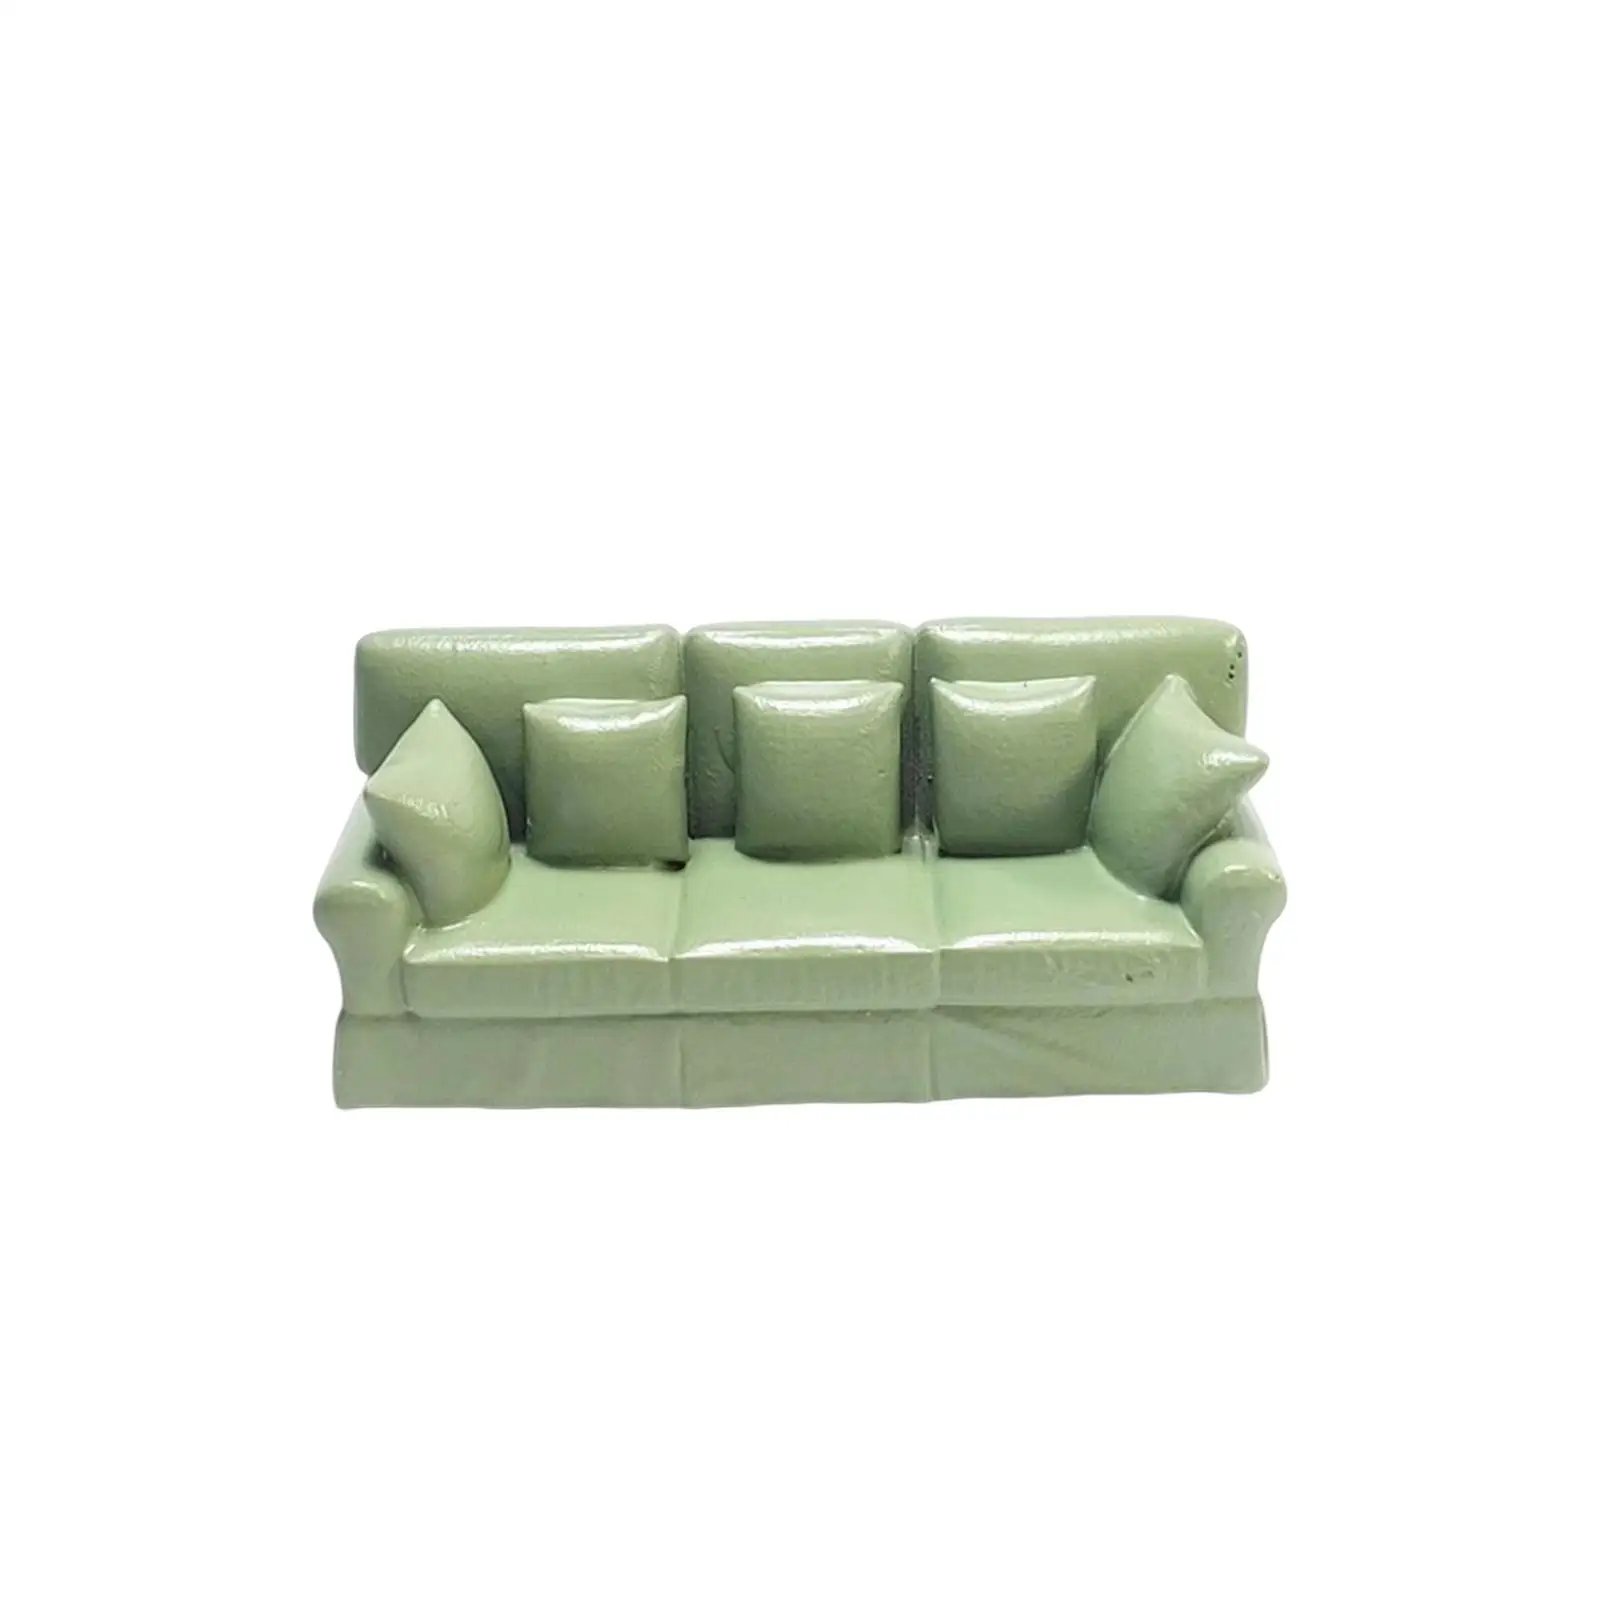 1/64 Mini Ornaments Furniture Miniature Resin Sofa Model for Playhouses, Studio